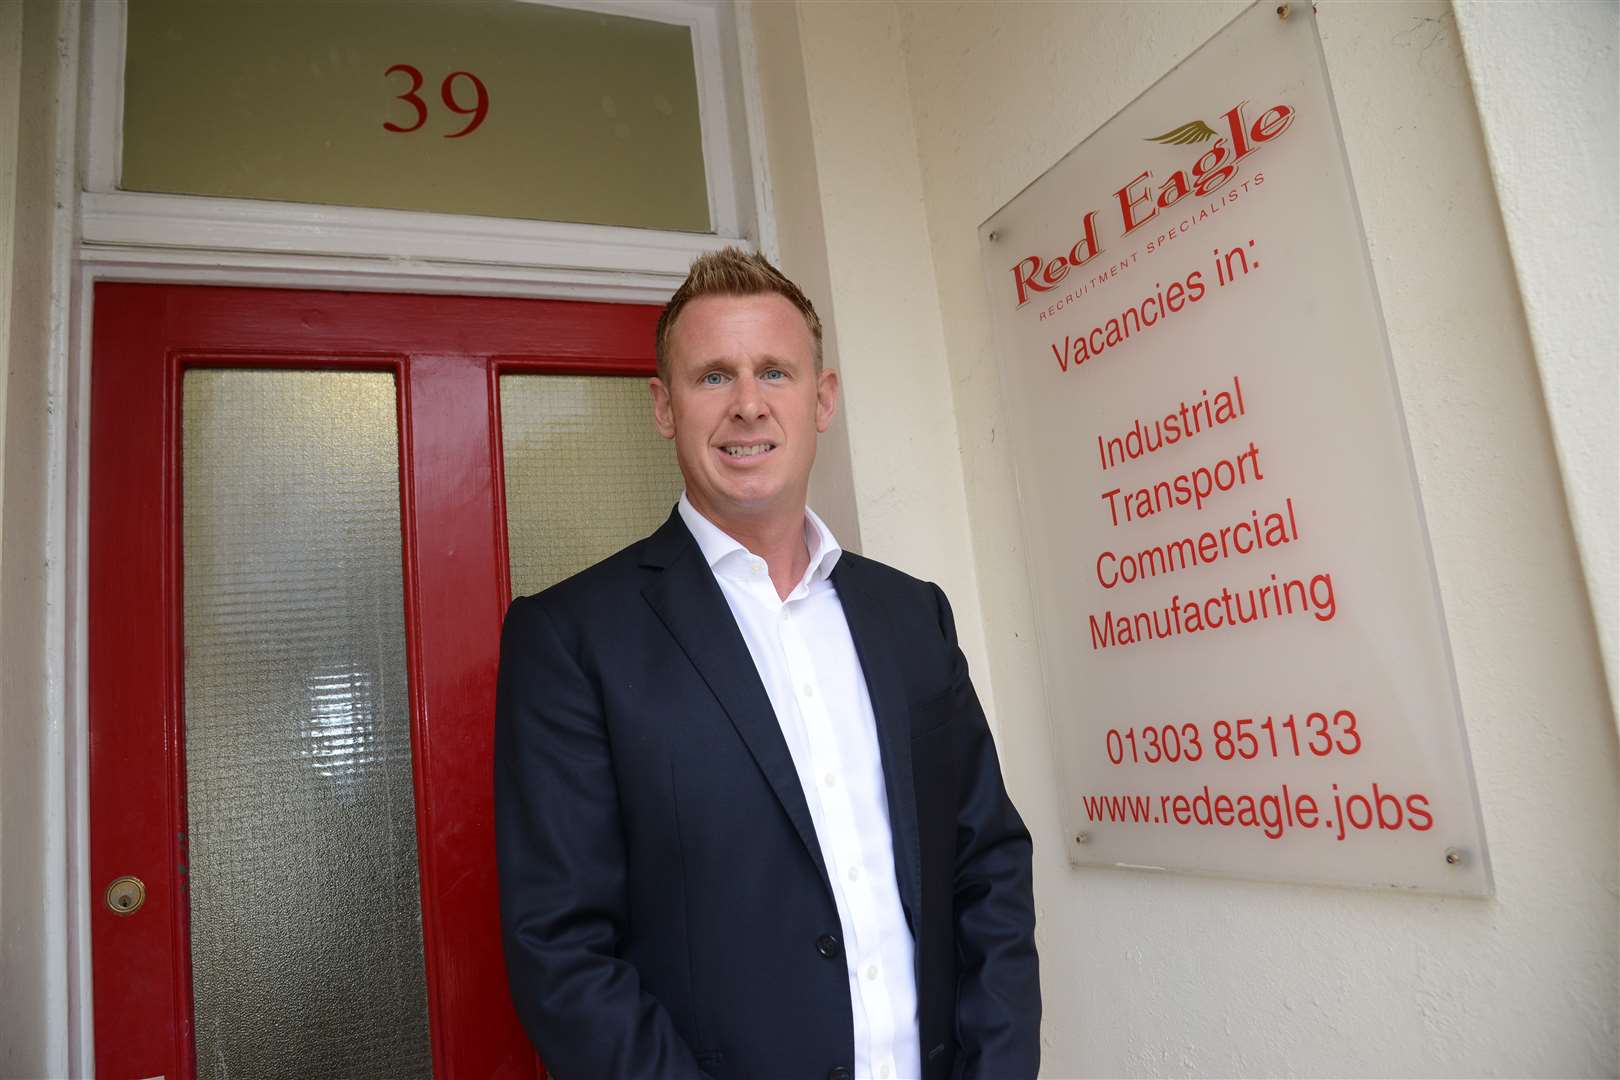 Wayne Hodgson is managing director of Red Eagle